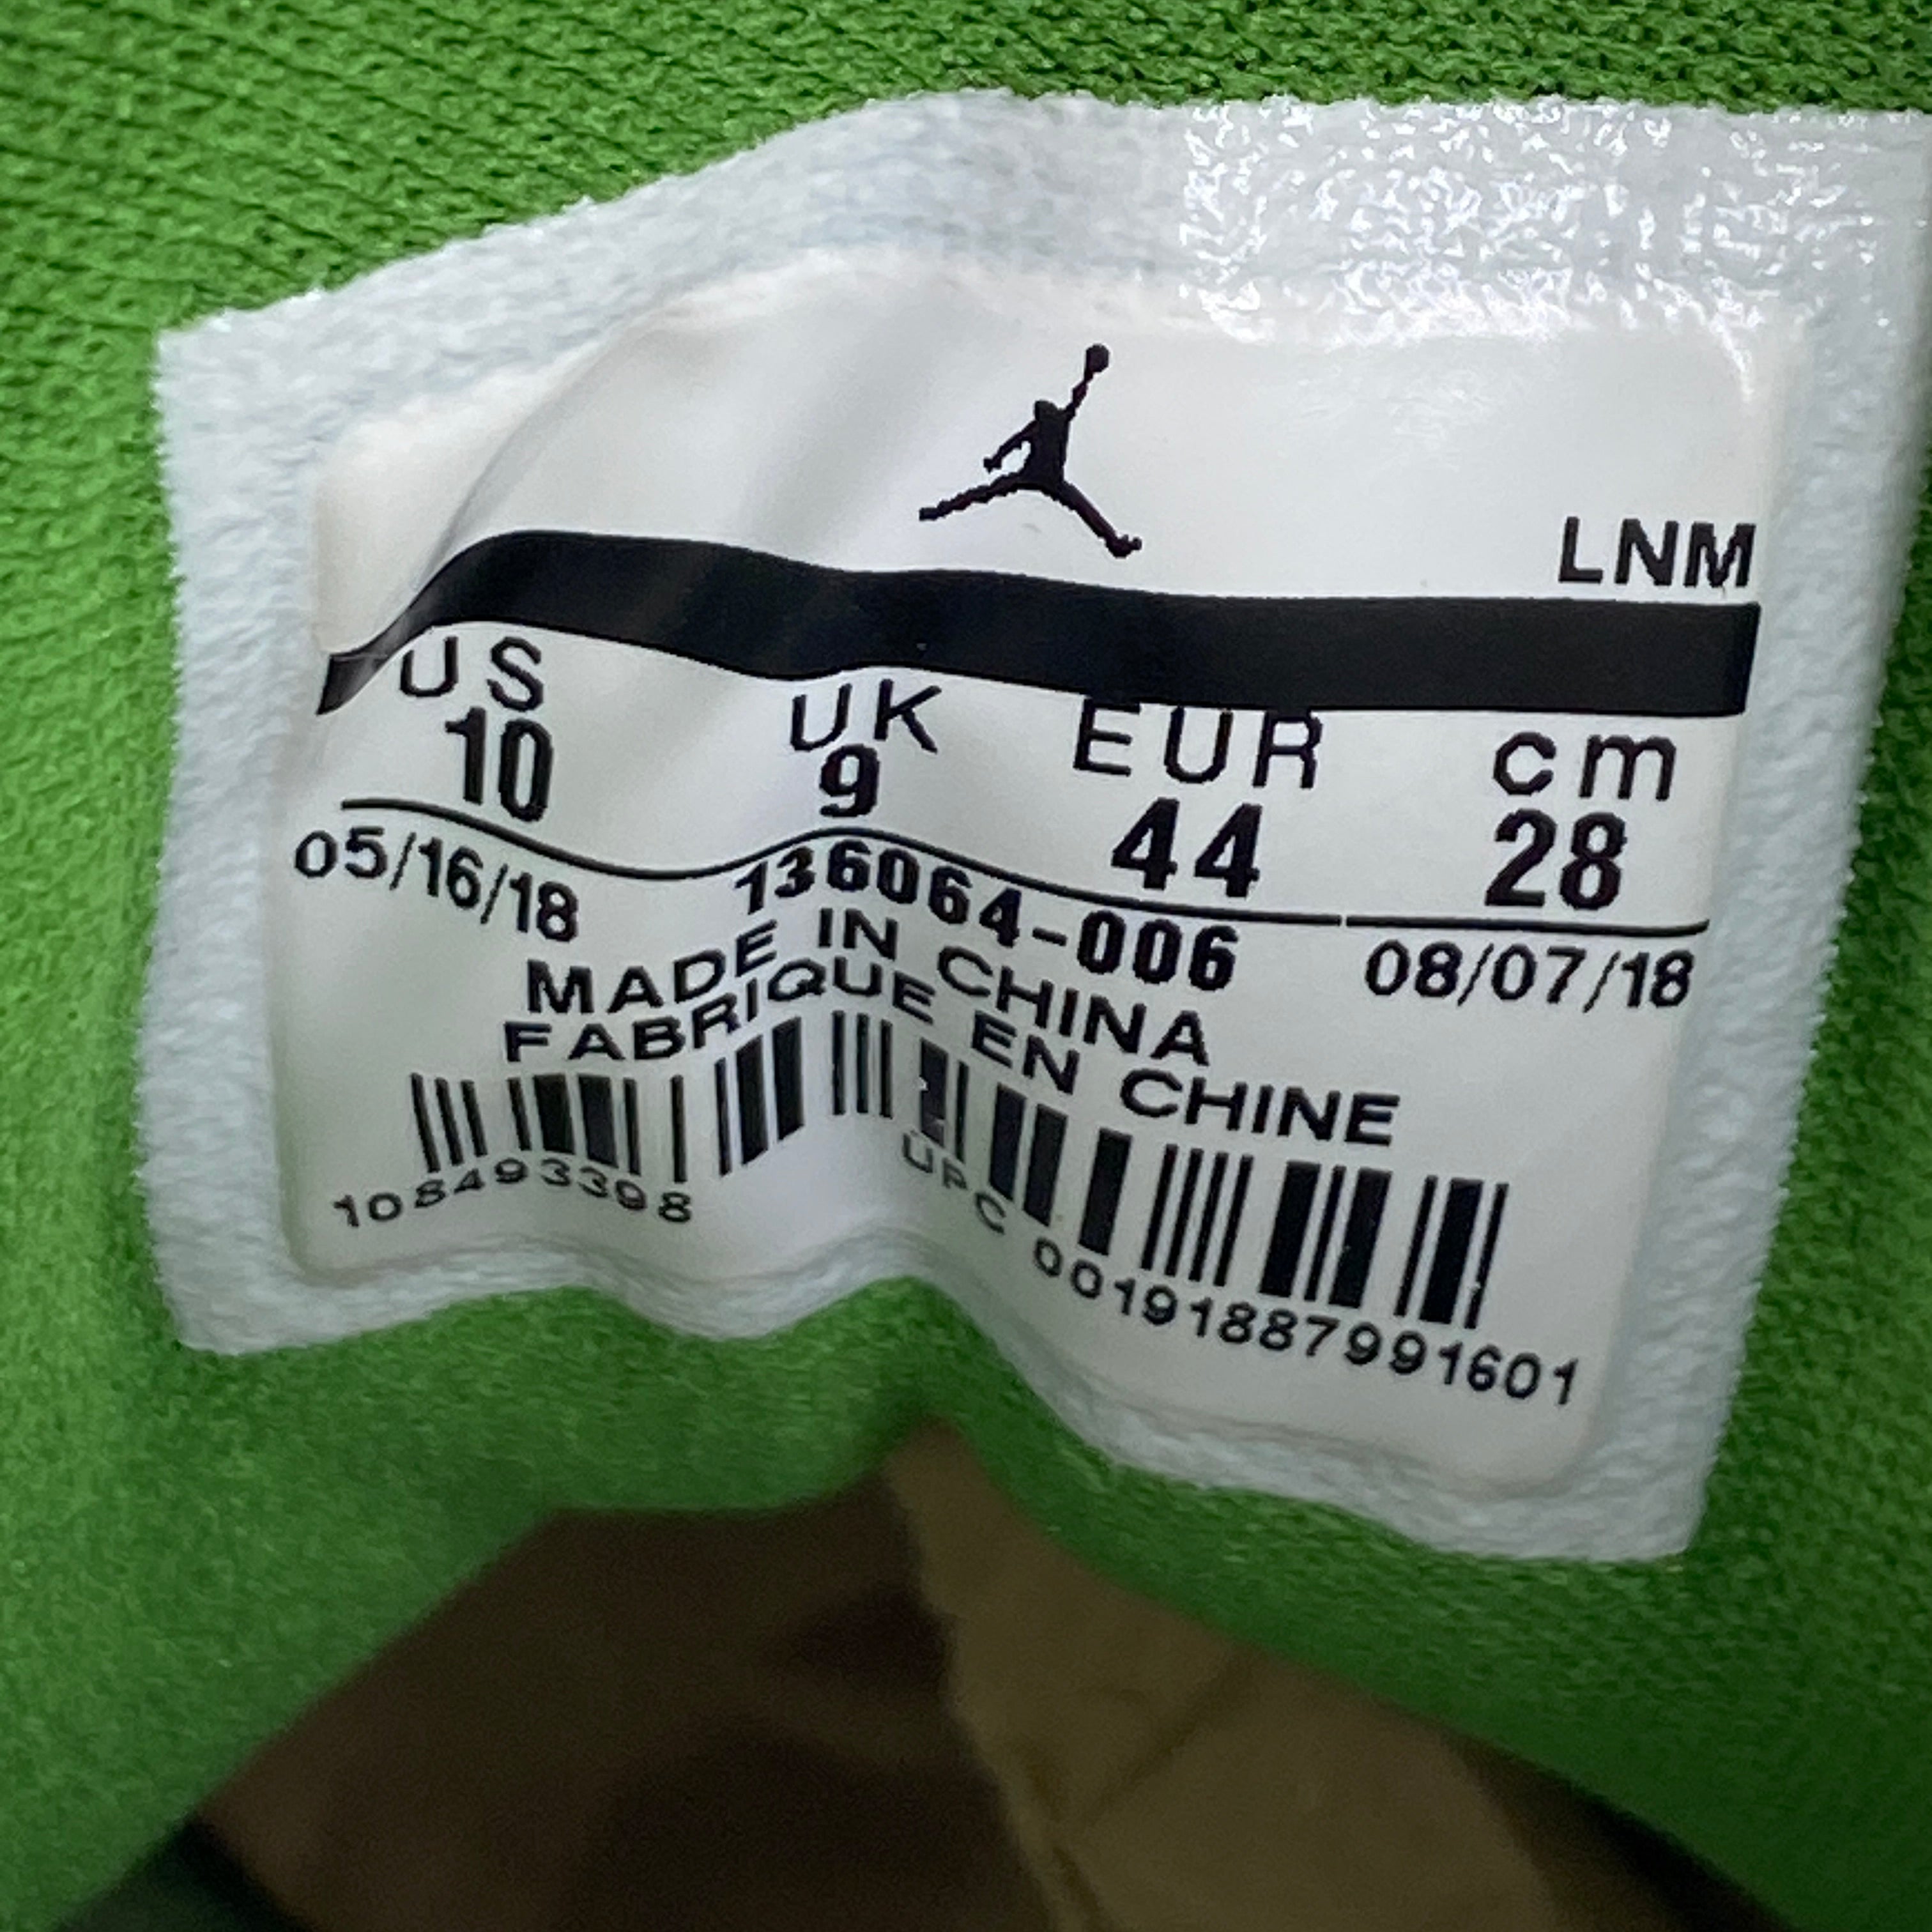 Air Jordan 3 Retro "Clorophyll" 2018 Used Size 10